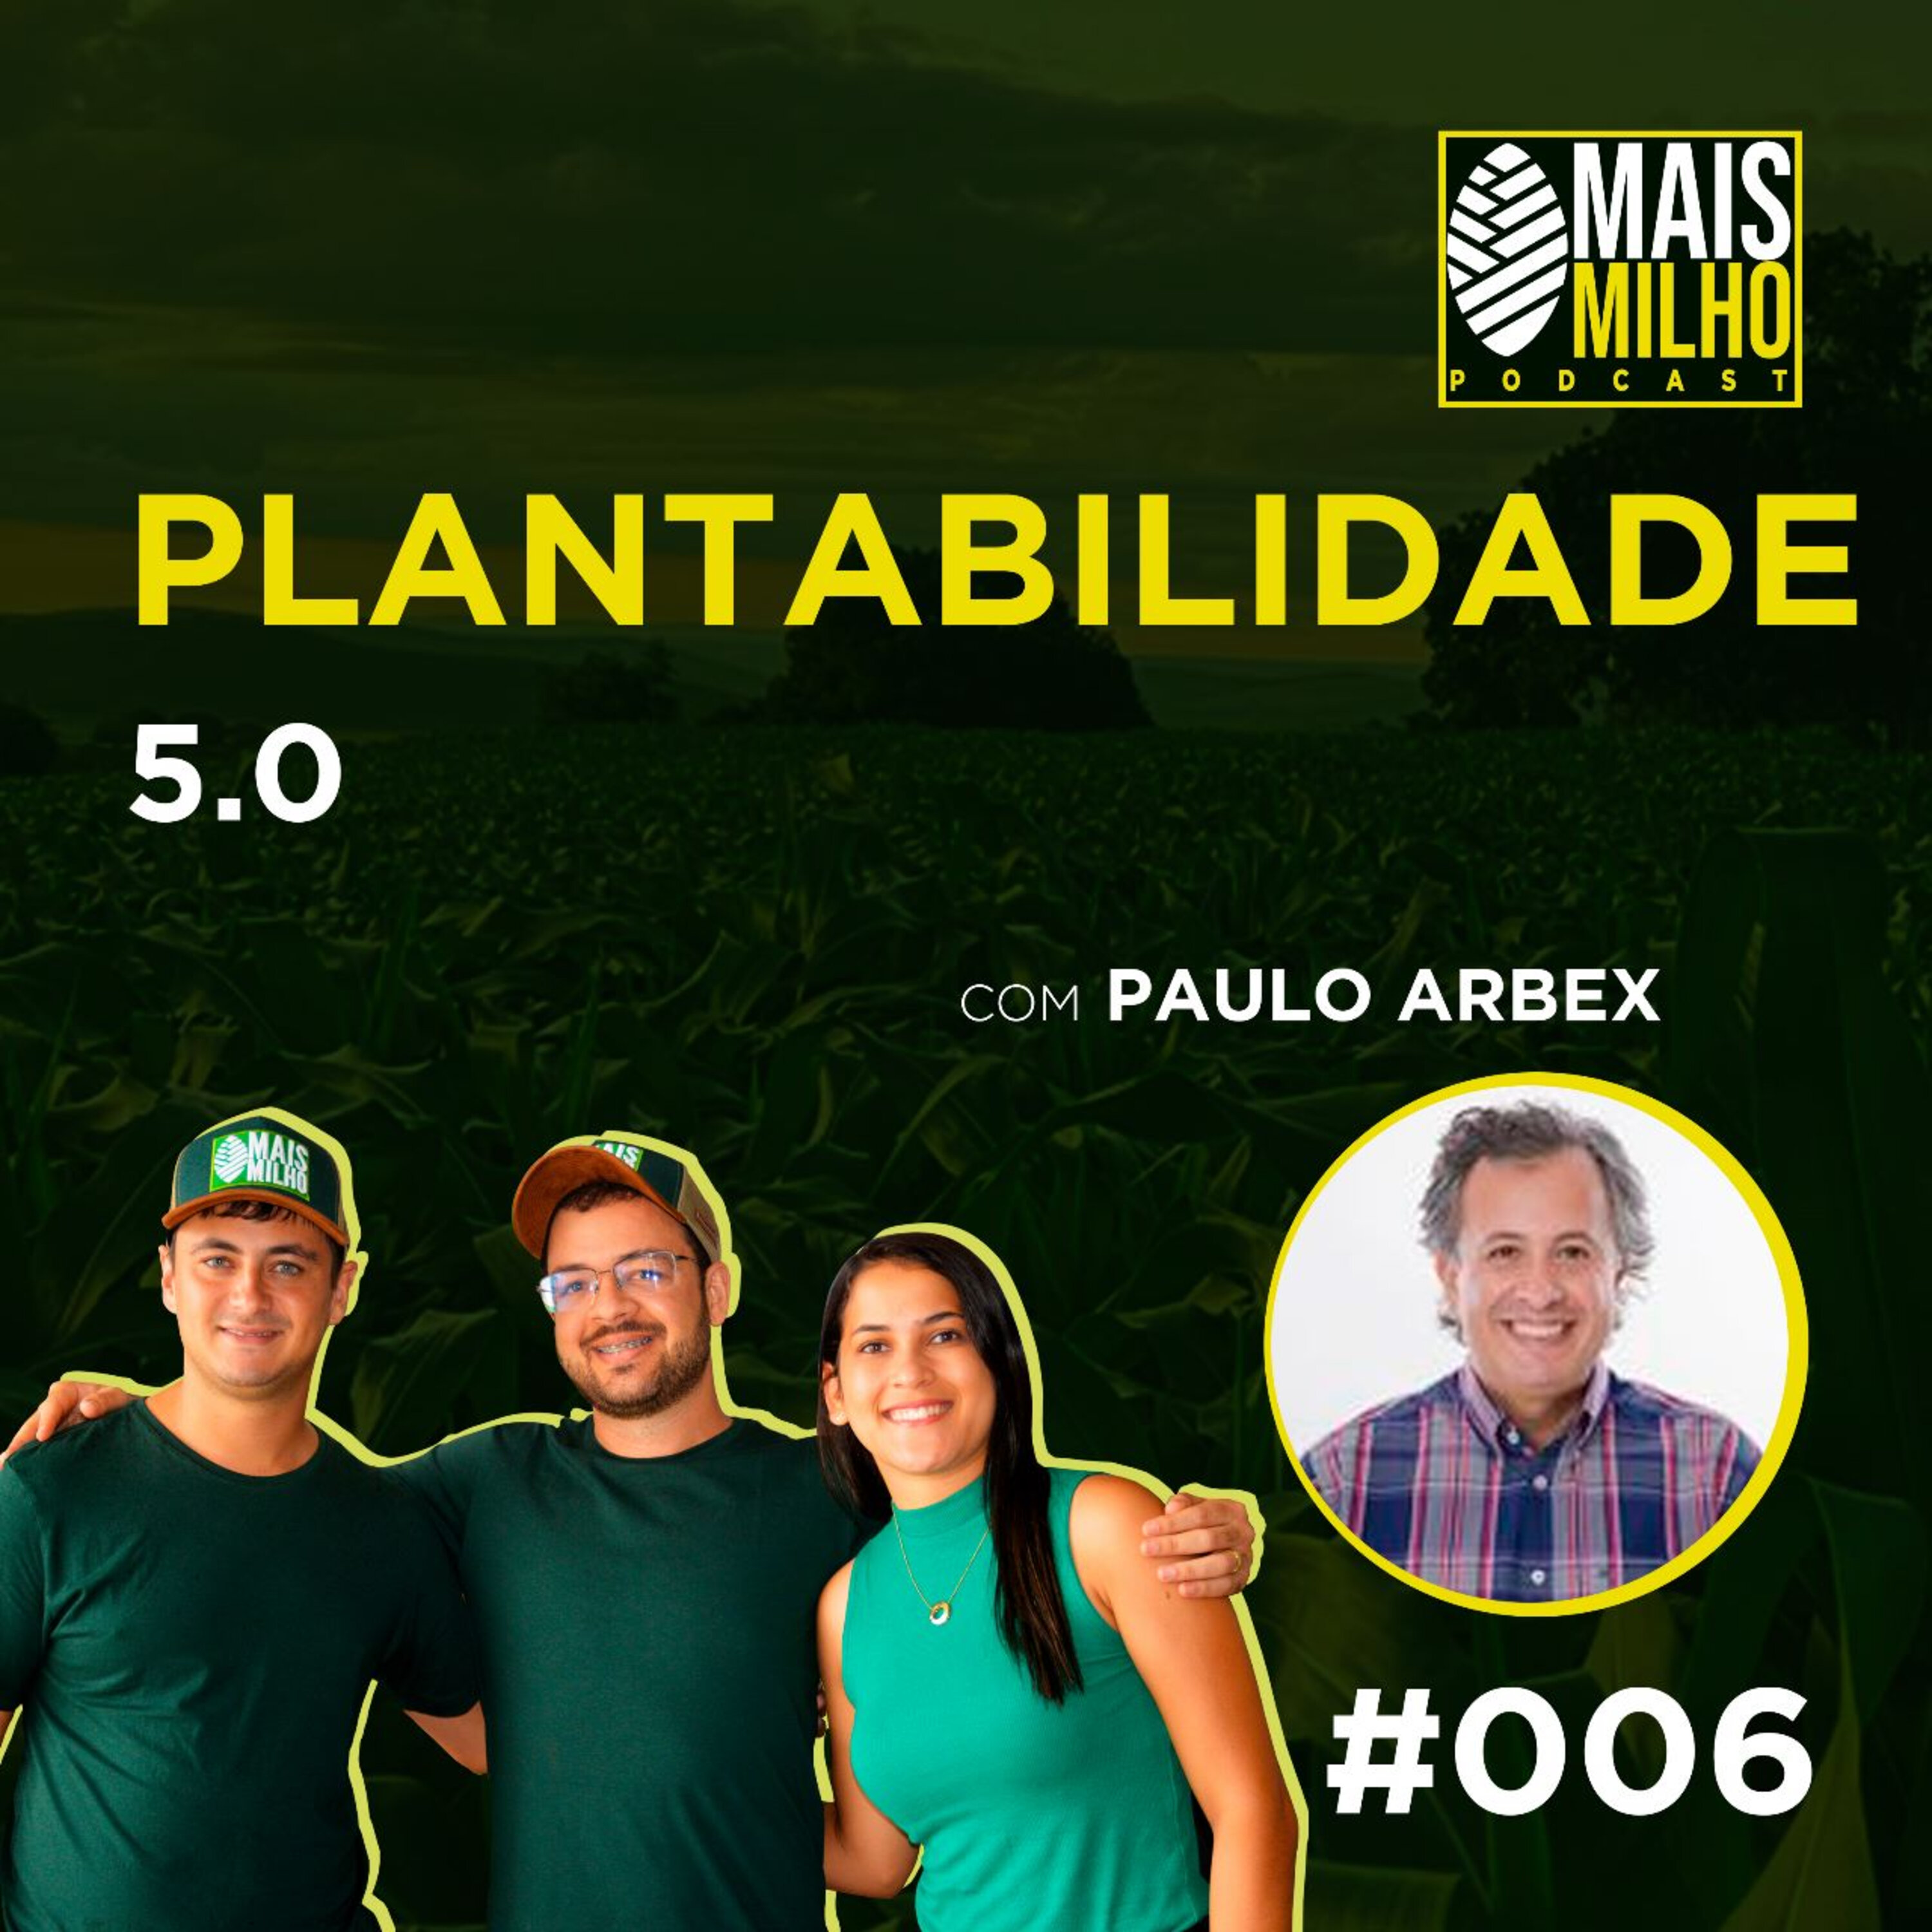 #006 - PAULO ARBEX: PLANTABILIDADE 5.0